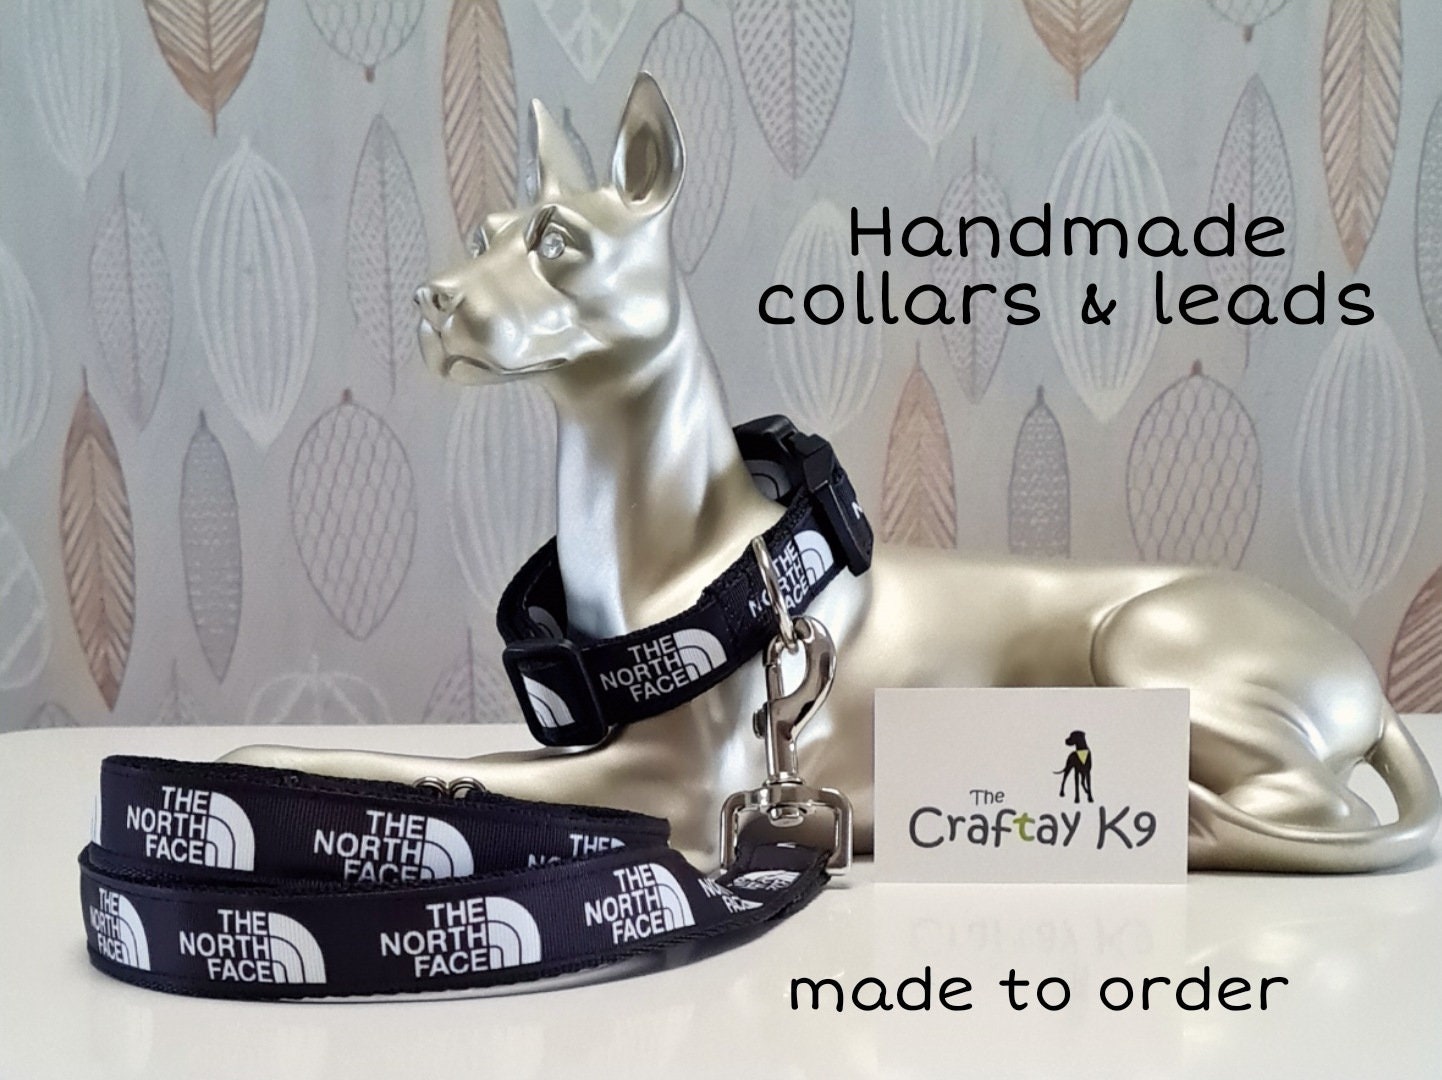 Goyard Dog Collars & Pet Accessories On Sale